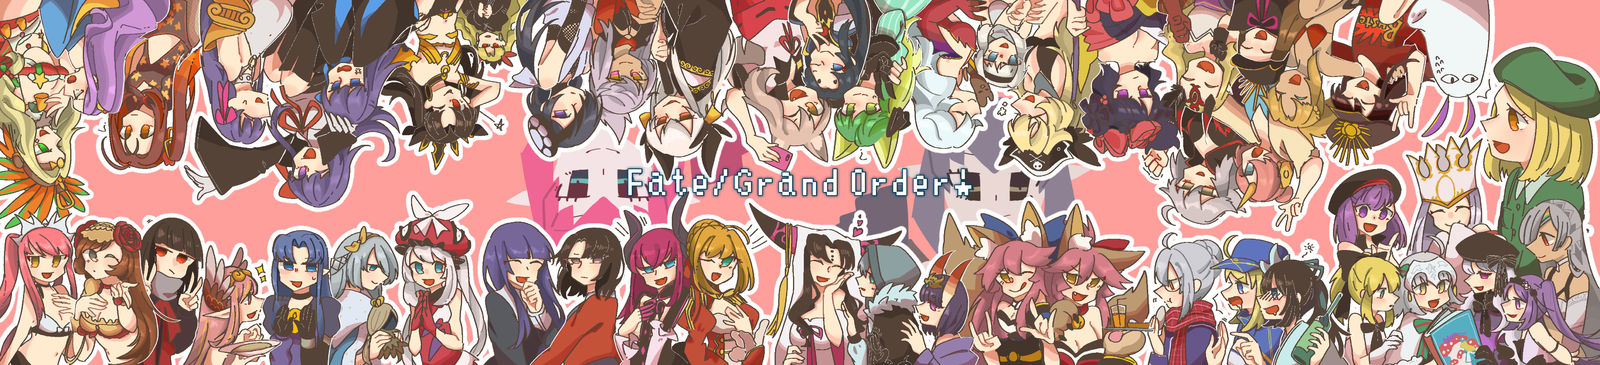 Fate/Grand Order!插画图片壁纸